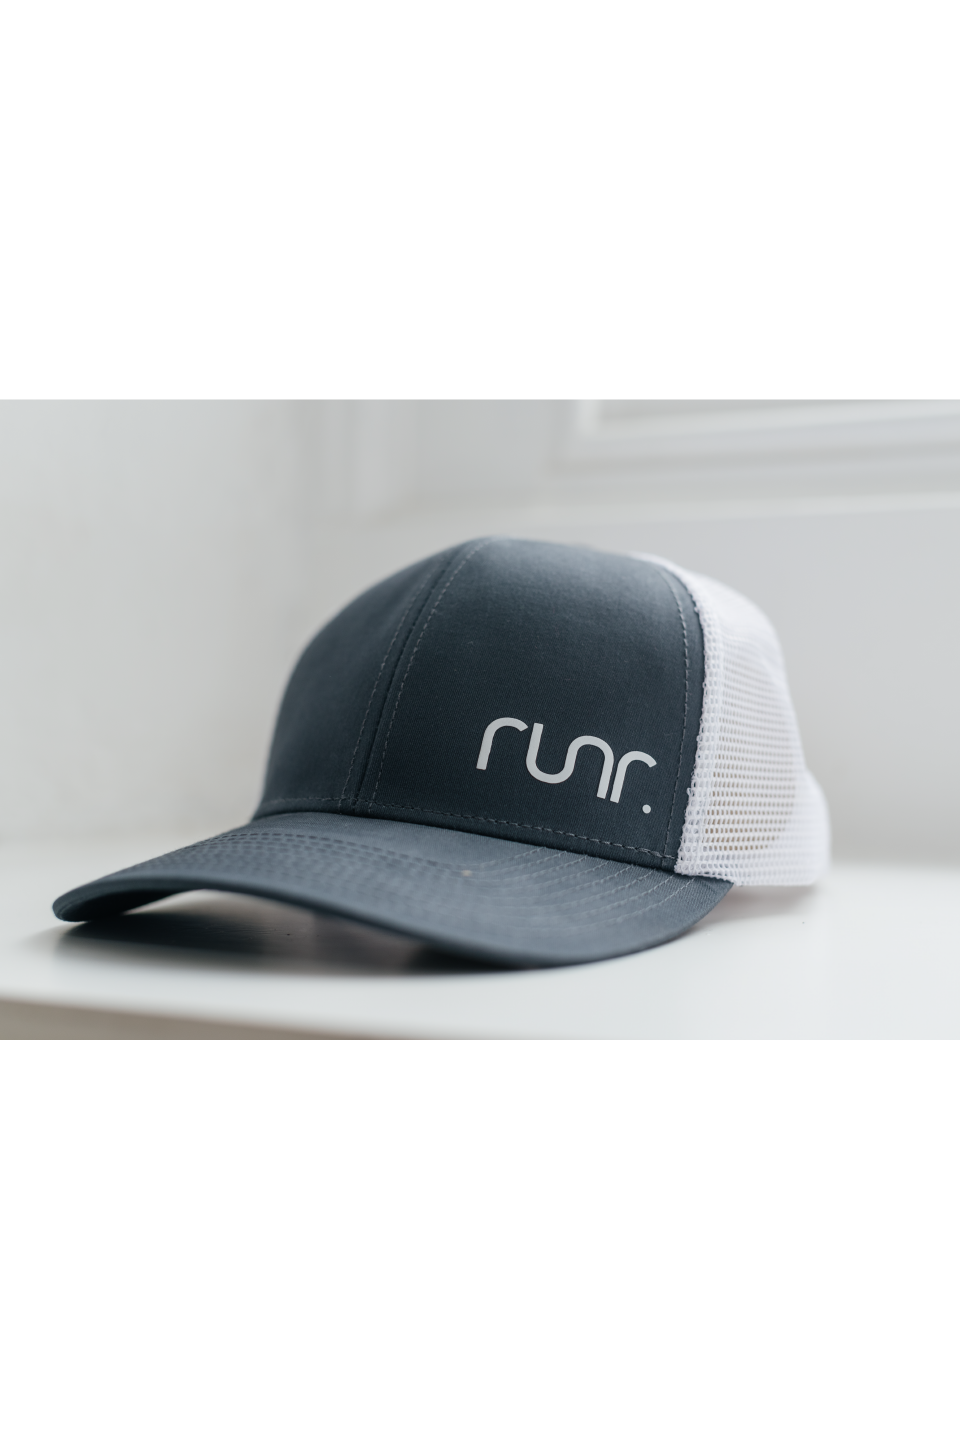 Runr Two Tone Retro Trucker Hat - Charcoal & White